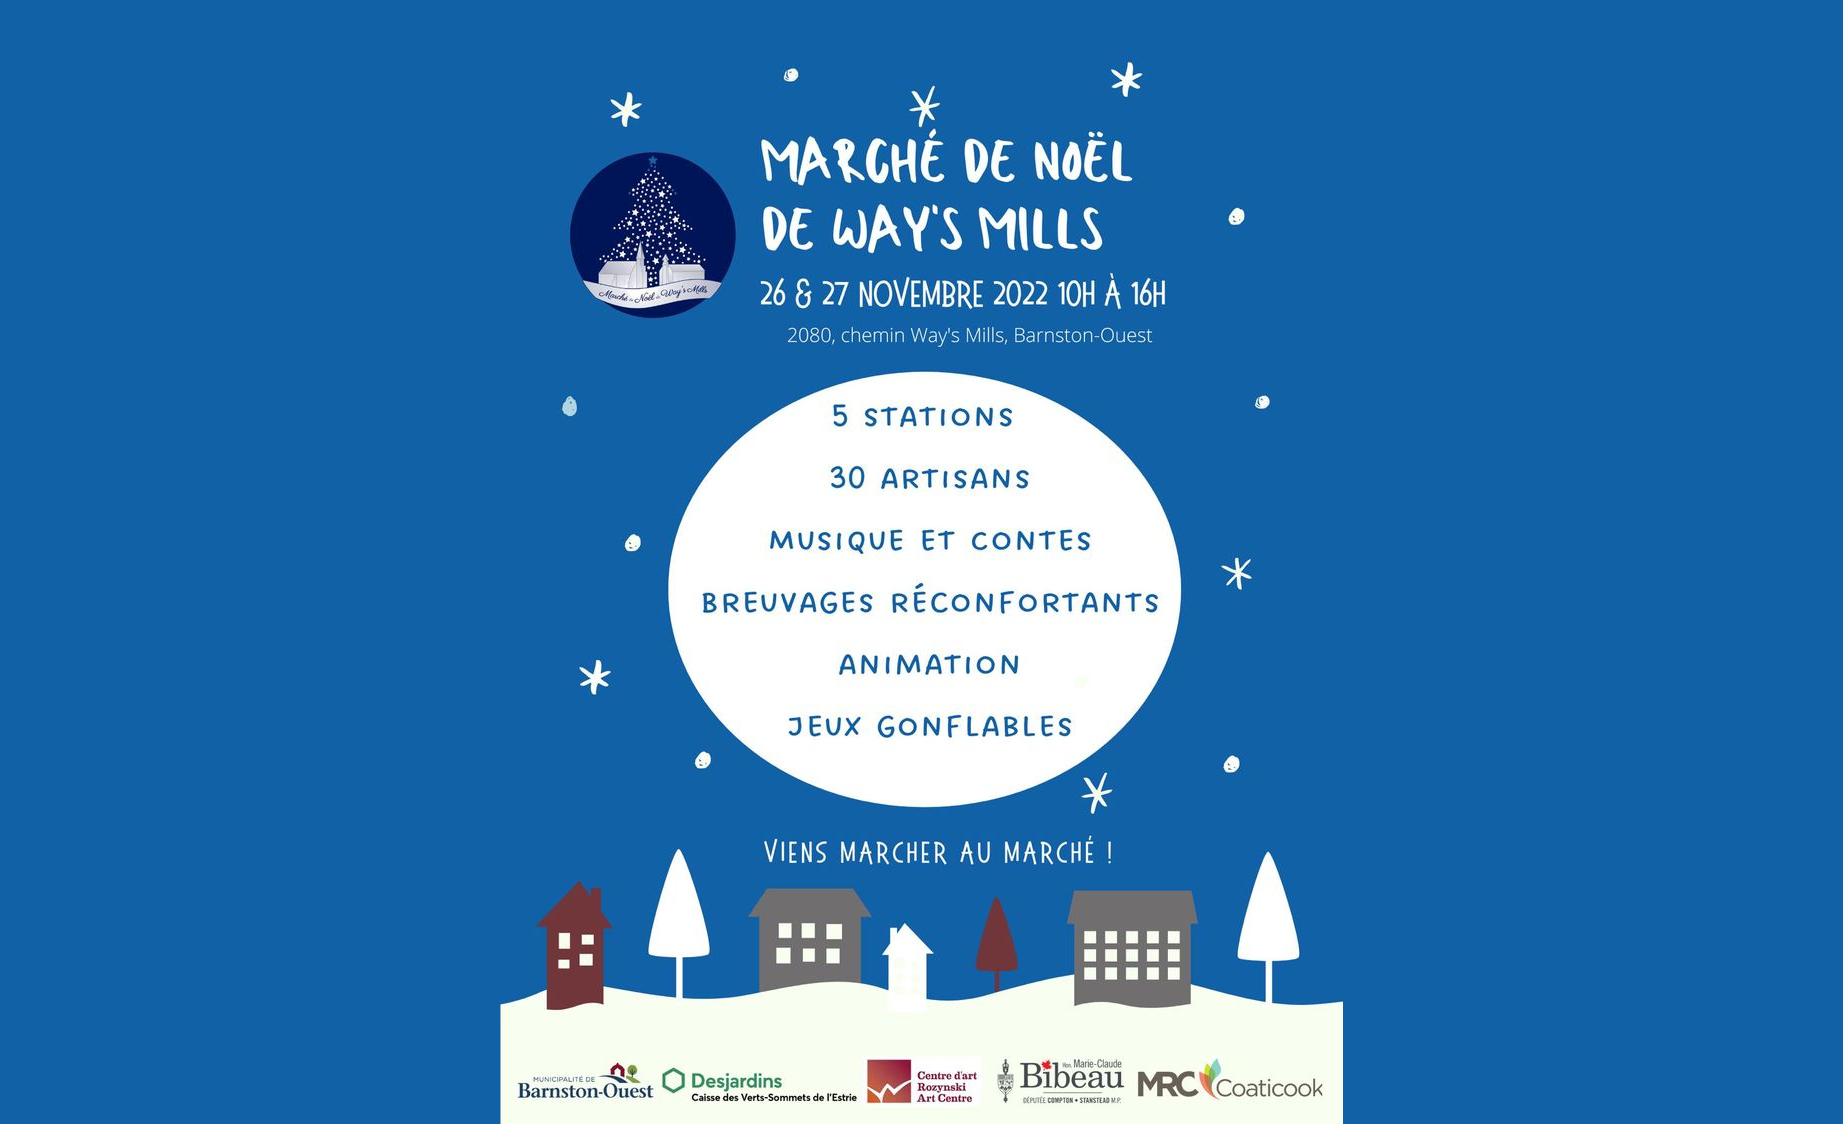 Way's Mills Christmas Market - November 26 and 27, 2022